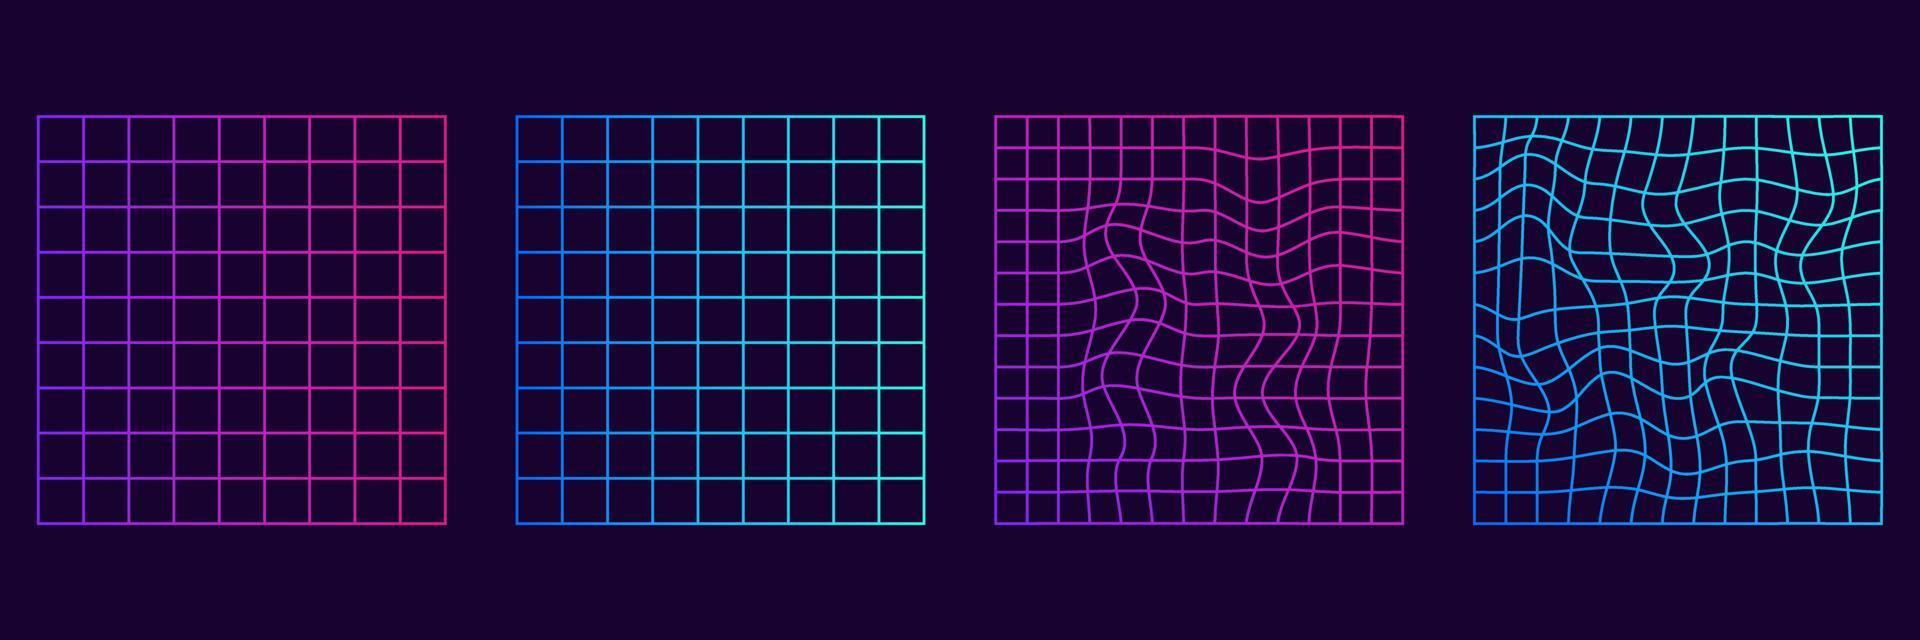 Distorted Grid Square Neon Pattern. Trendy retro 1980s, 90s style. Wave Ripple Perspective Square. Warp Futuristic Geometric Square Glitch. Abstract Modern Design. Isolated Vector Illustration.